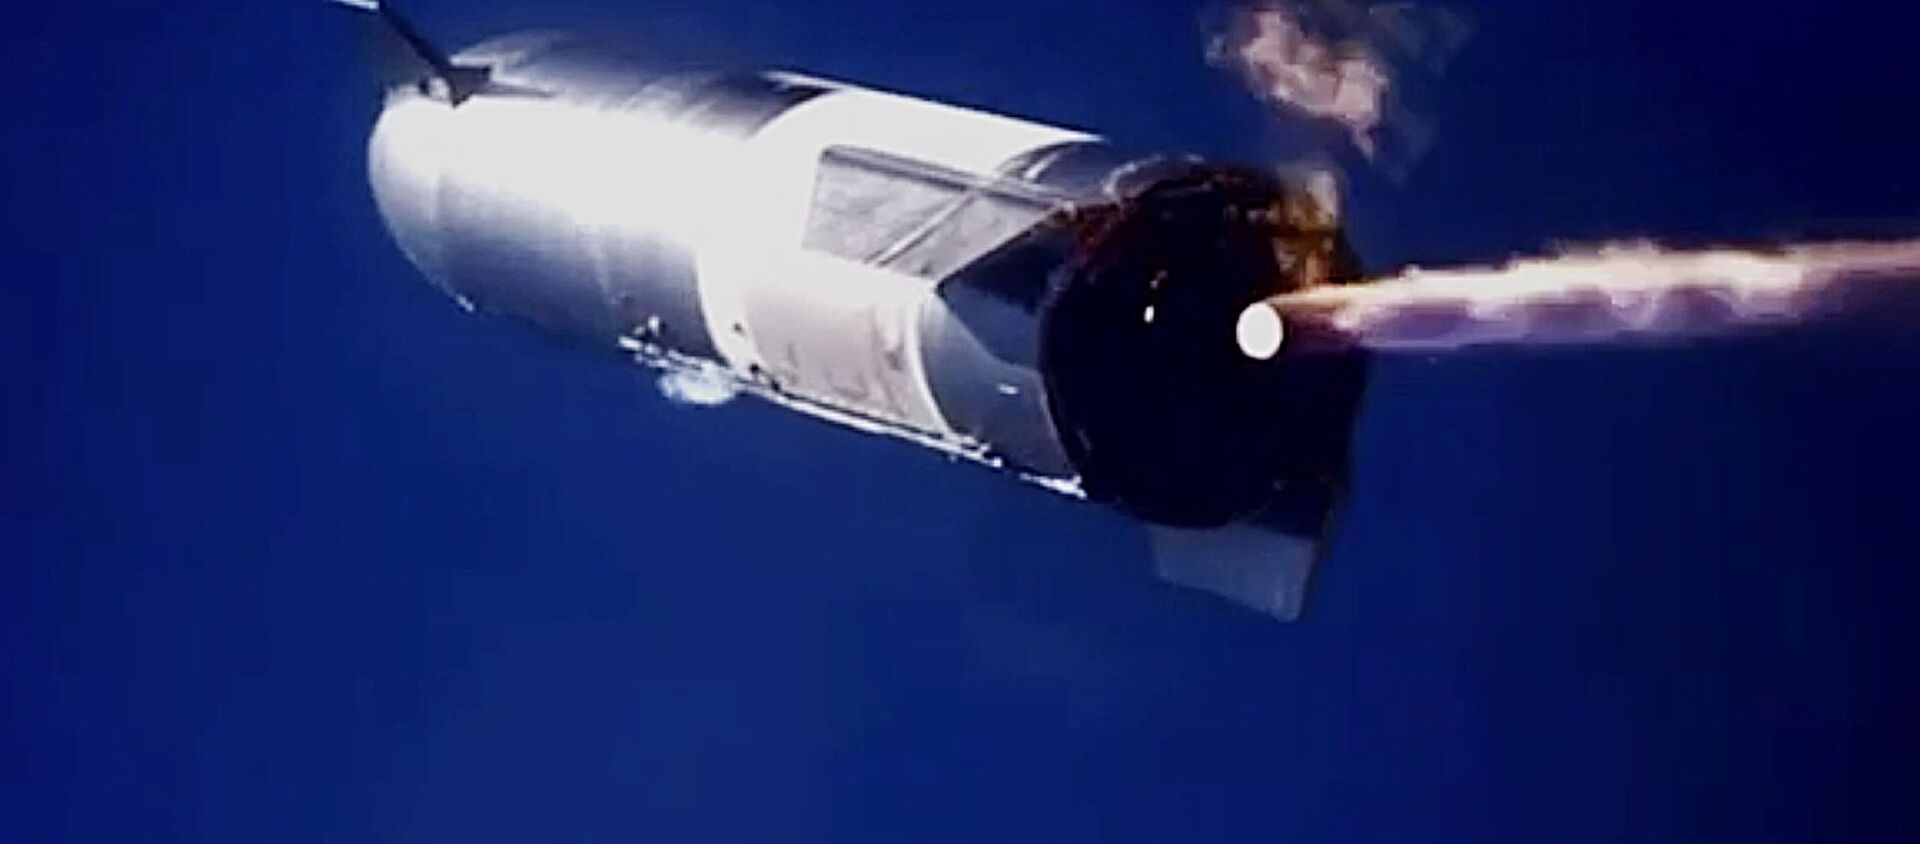 Bandymų metu susprogo raketos SpaceX prototipas  - Sputnik Lietuva, 1920, 03.02.2021